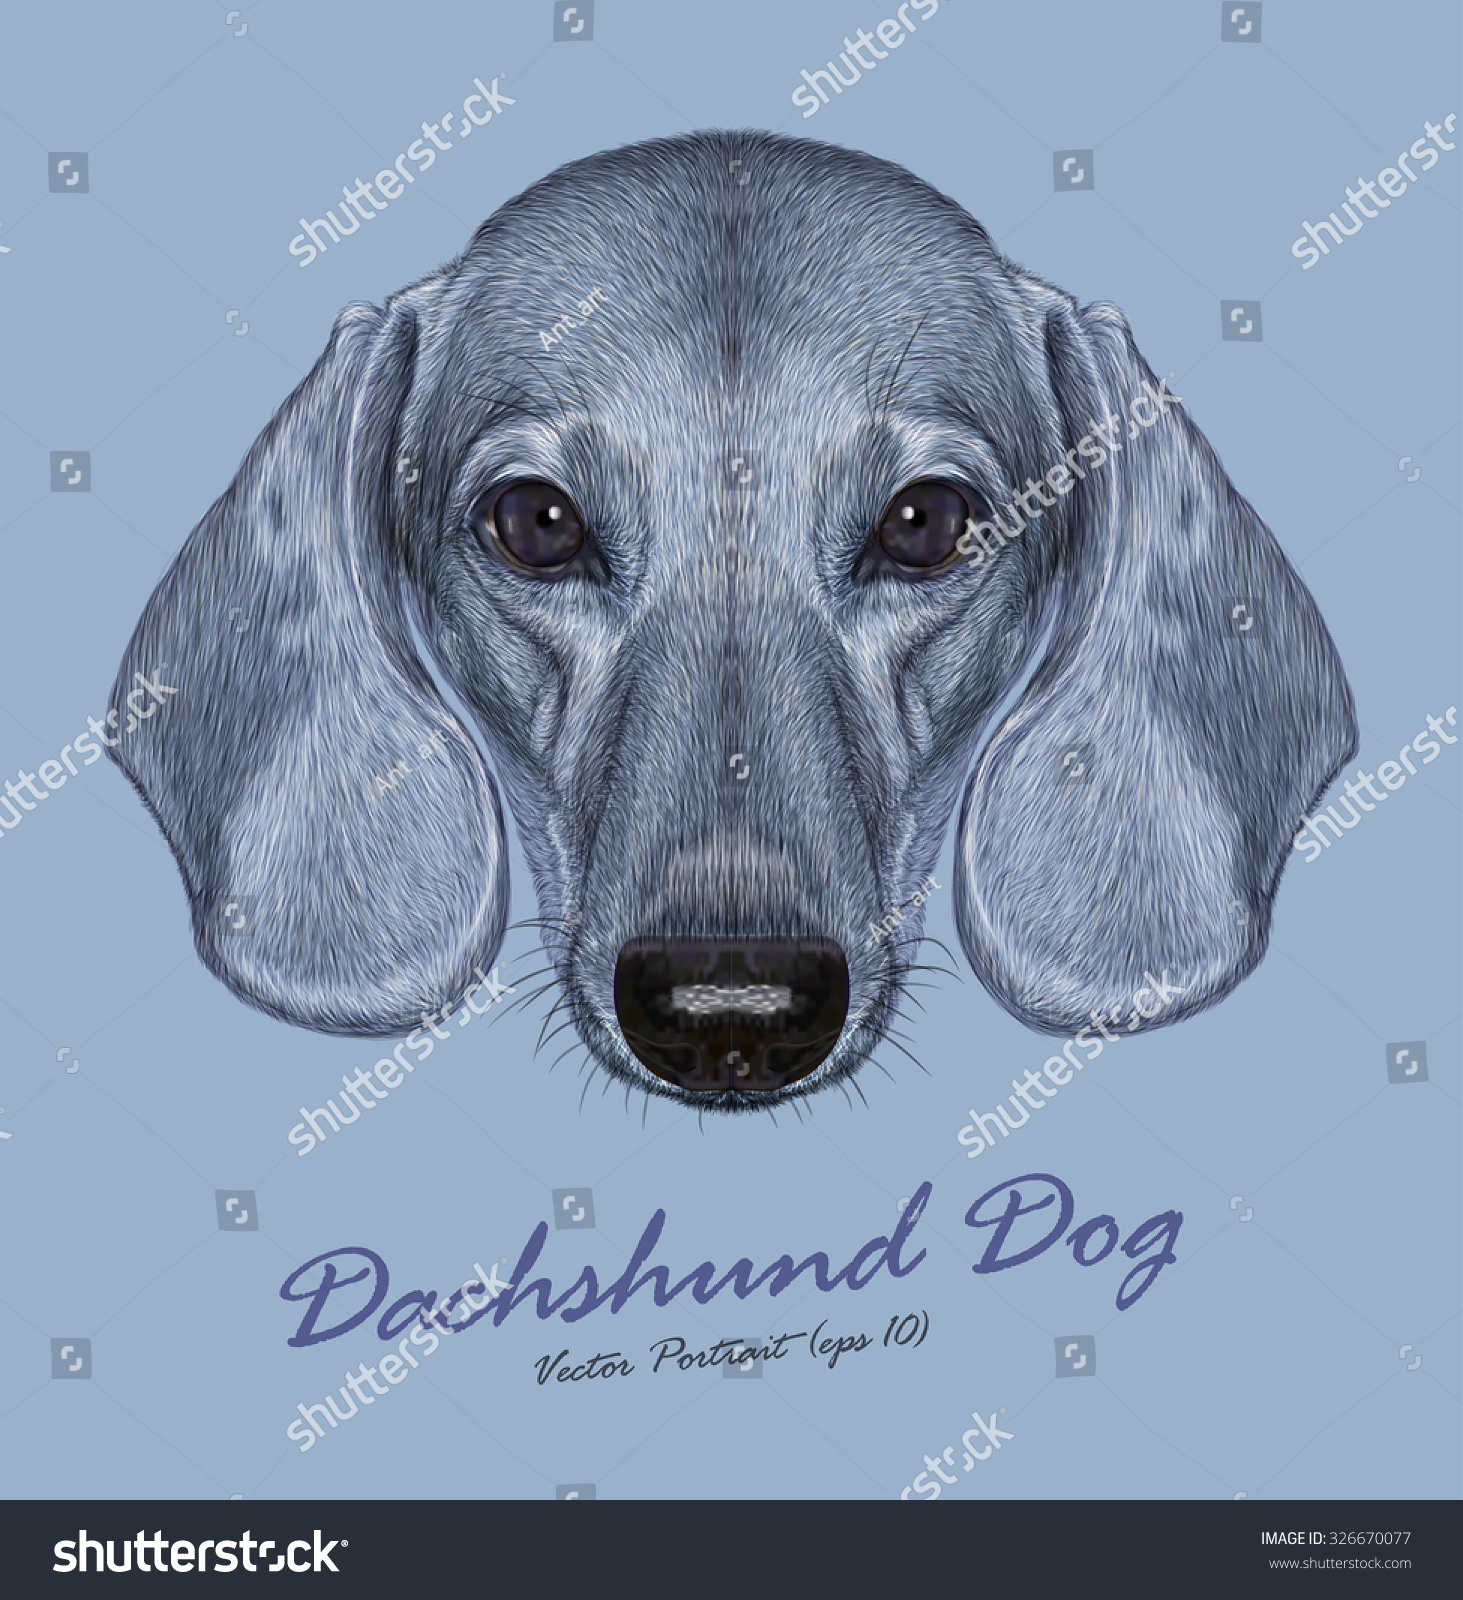 SVG of Dachshund dog animal cute face. Vector cute dachshund puppy head portrait. Realistic fur portrait of silver funny dachshund doggy isolated on blue background. svg